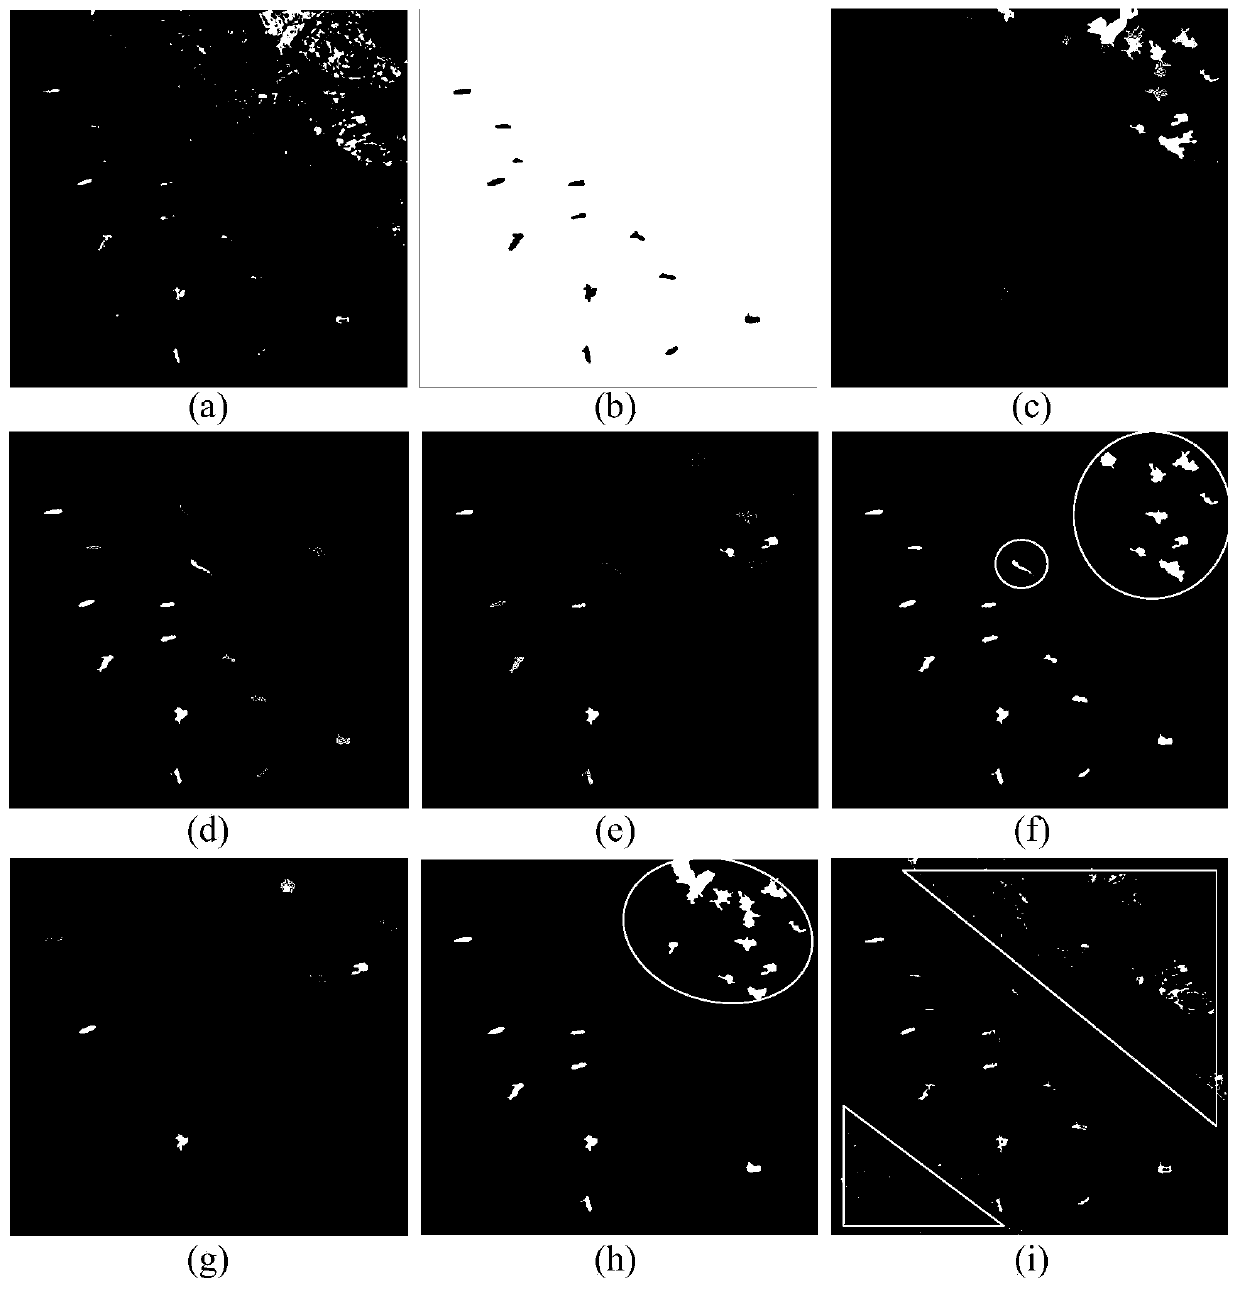 An SAR image ship target detection method based on superpixel statistical diversity